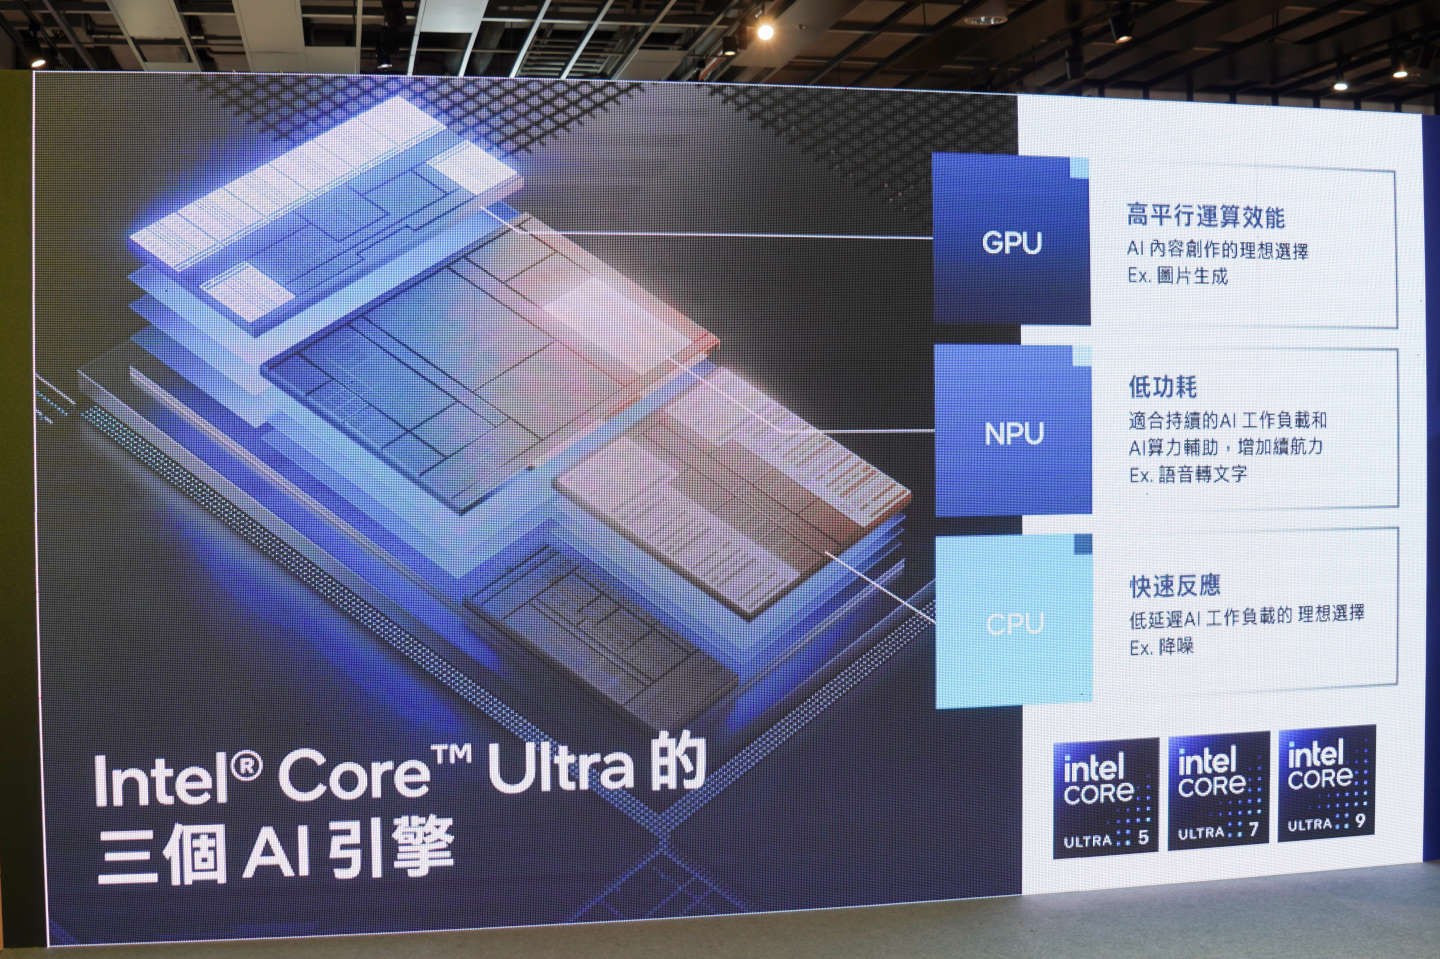 Core Ultra整合CPU（處理器）、GPU（繪圖處理器）或NPU（神經處理器）運算元件，能夠各司其職完成不同工作負載。